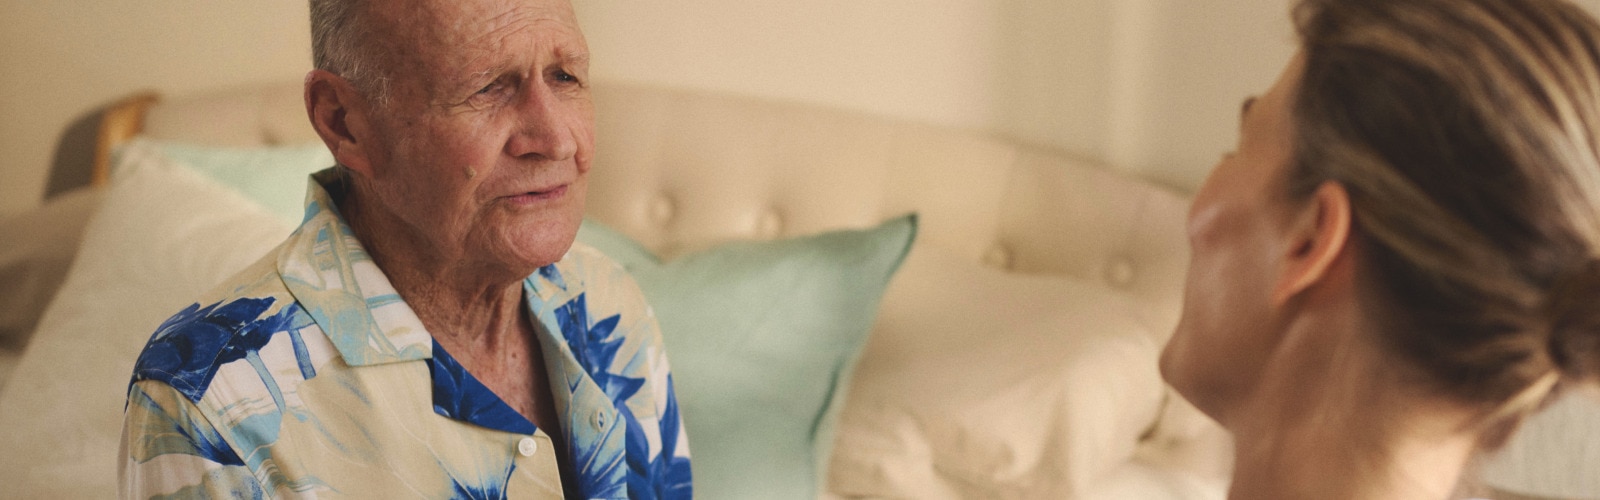 A professional caregiver helps a nursing home resident button his shirt